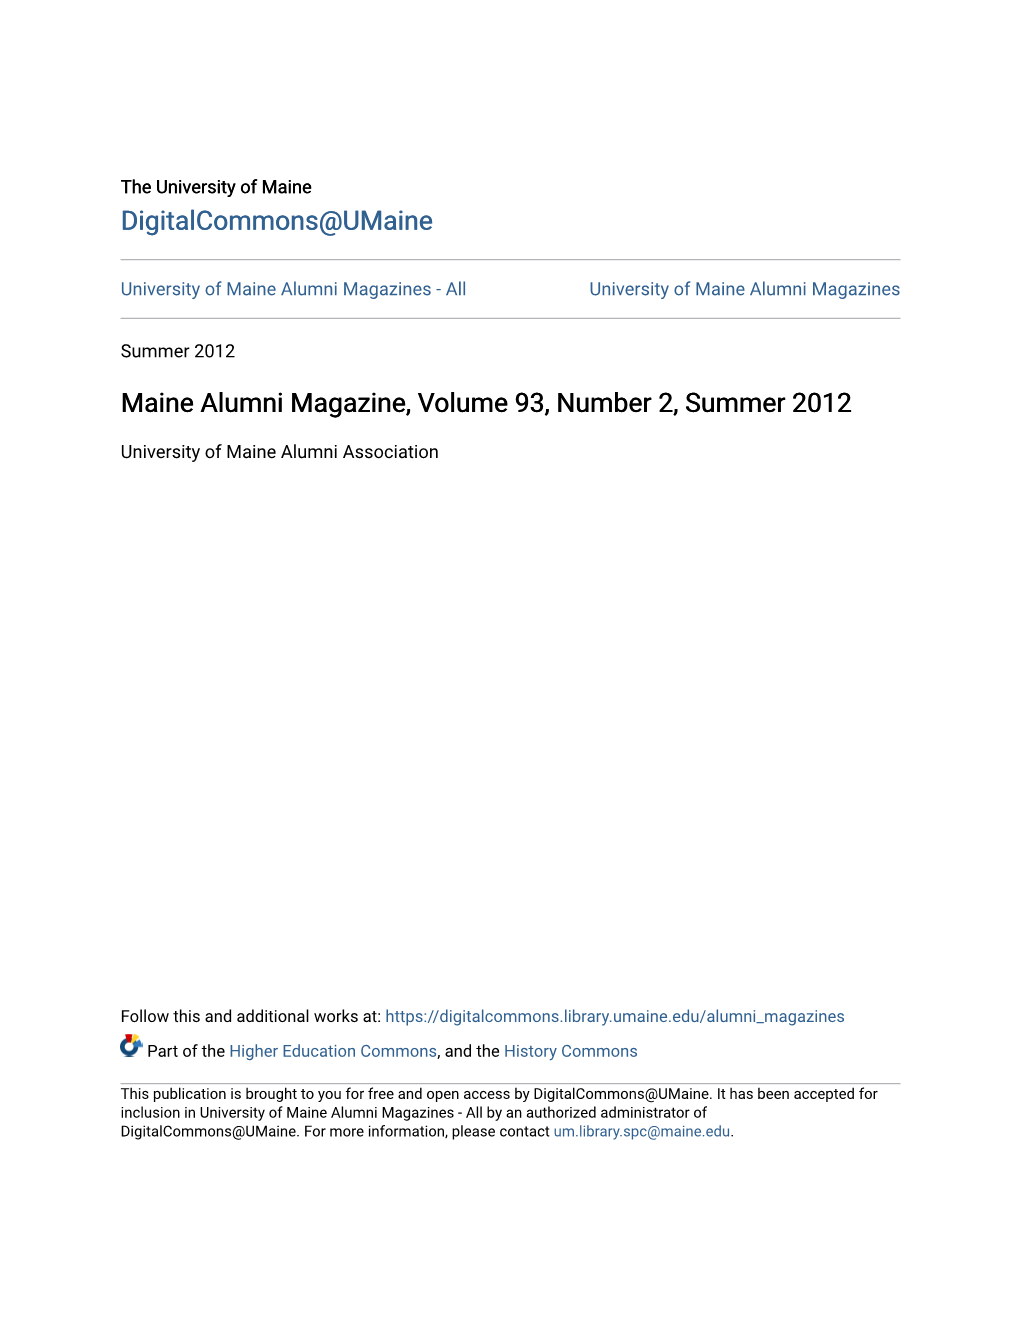 Maine Alumni Magazine, Volume 93, Number 2, Summer 2012